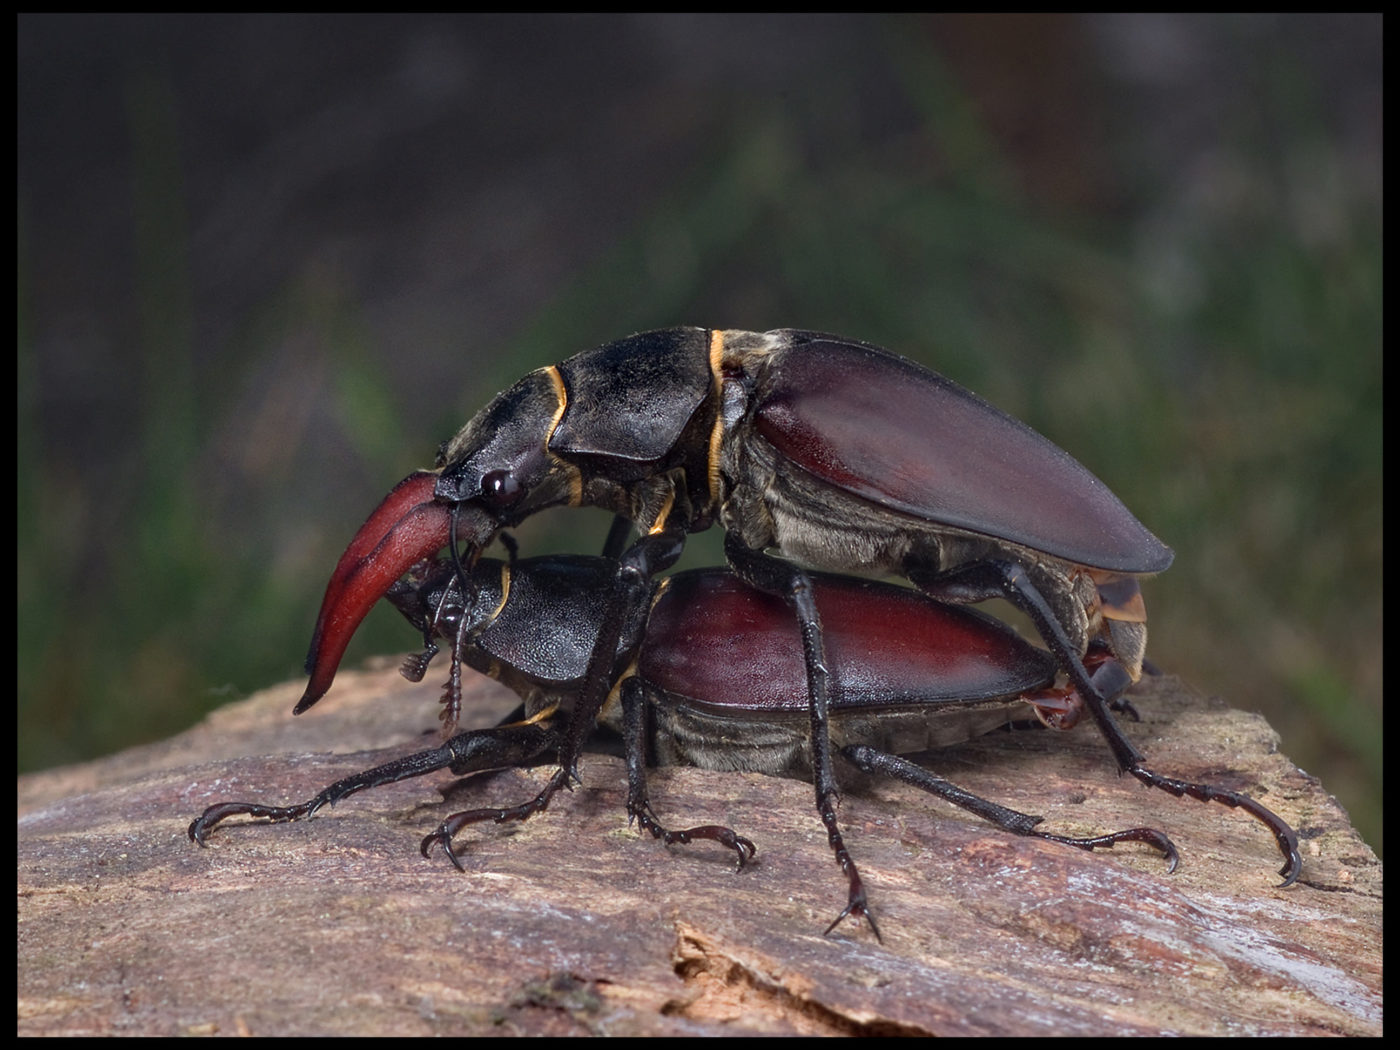 Mating stag beetles, Lucanus cervus